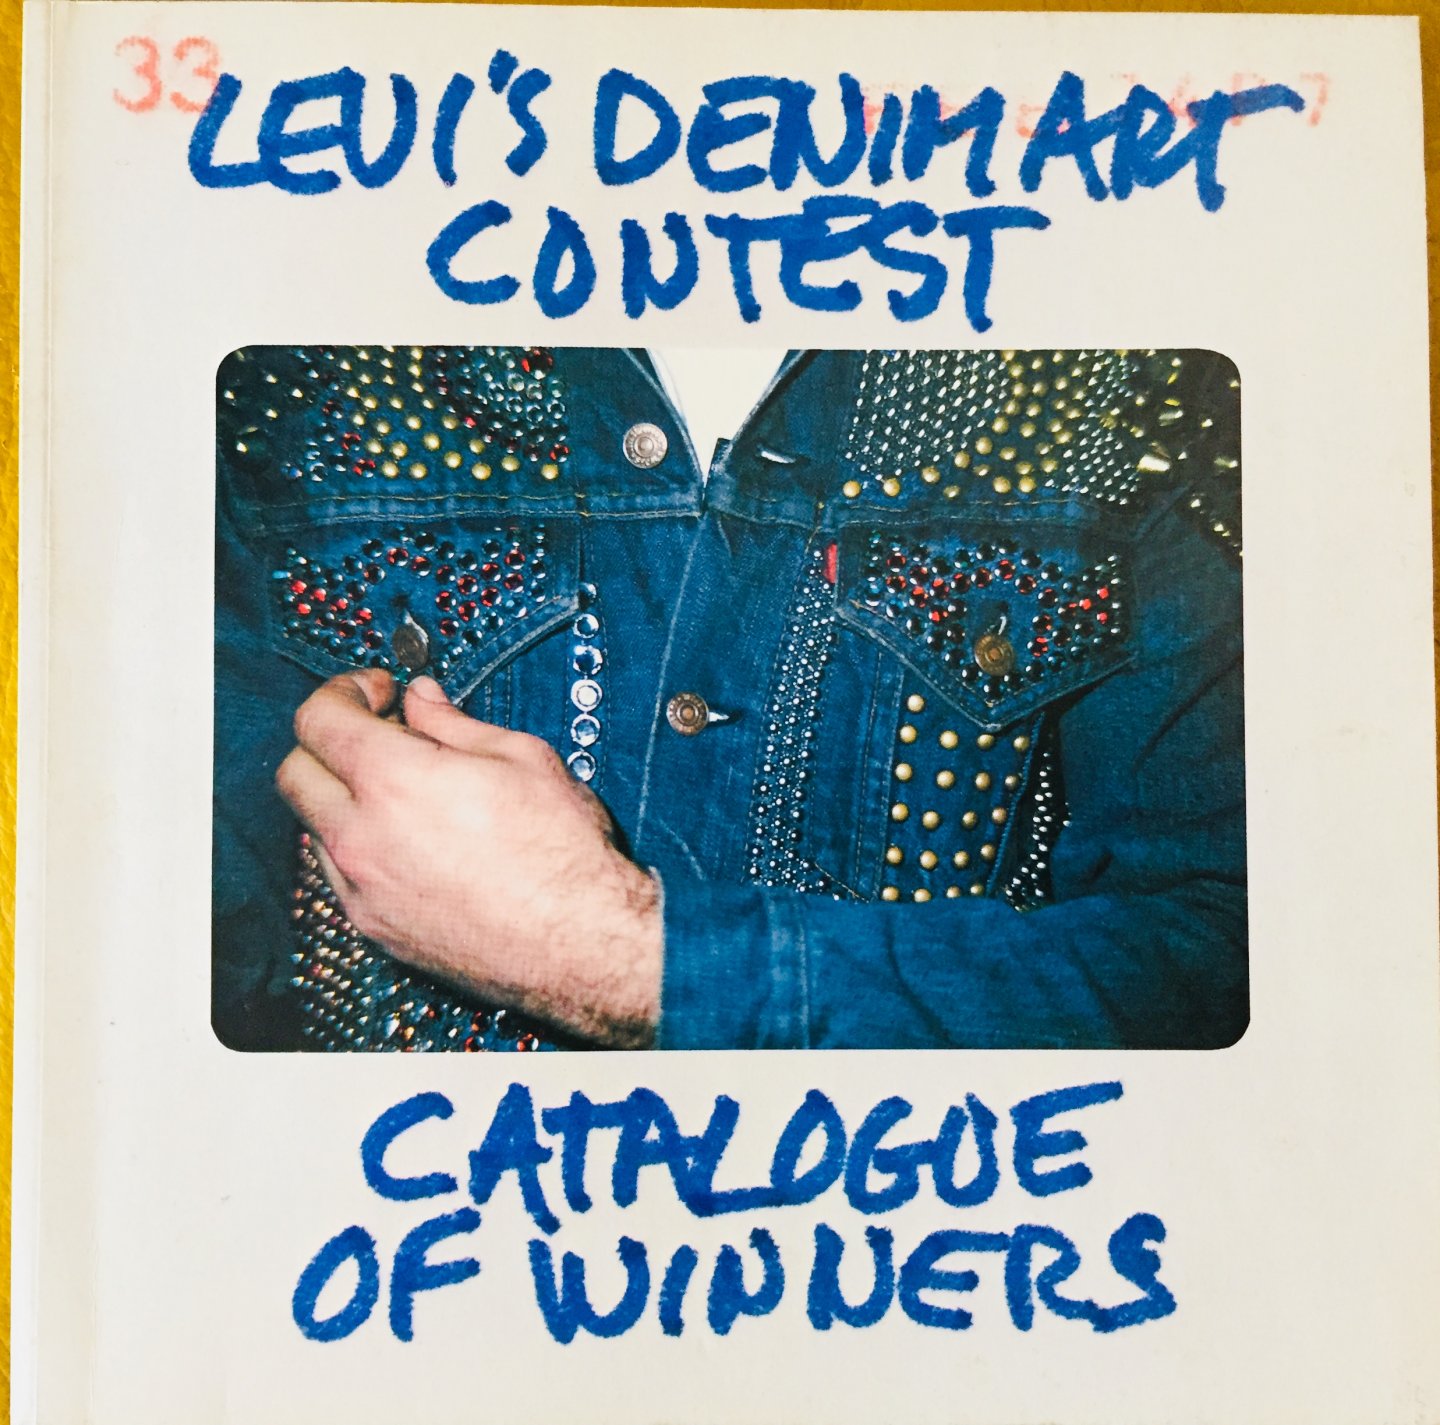 Lane, Tony. - Levi's Denim Art Contest Catalogue of Winners.